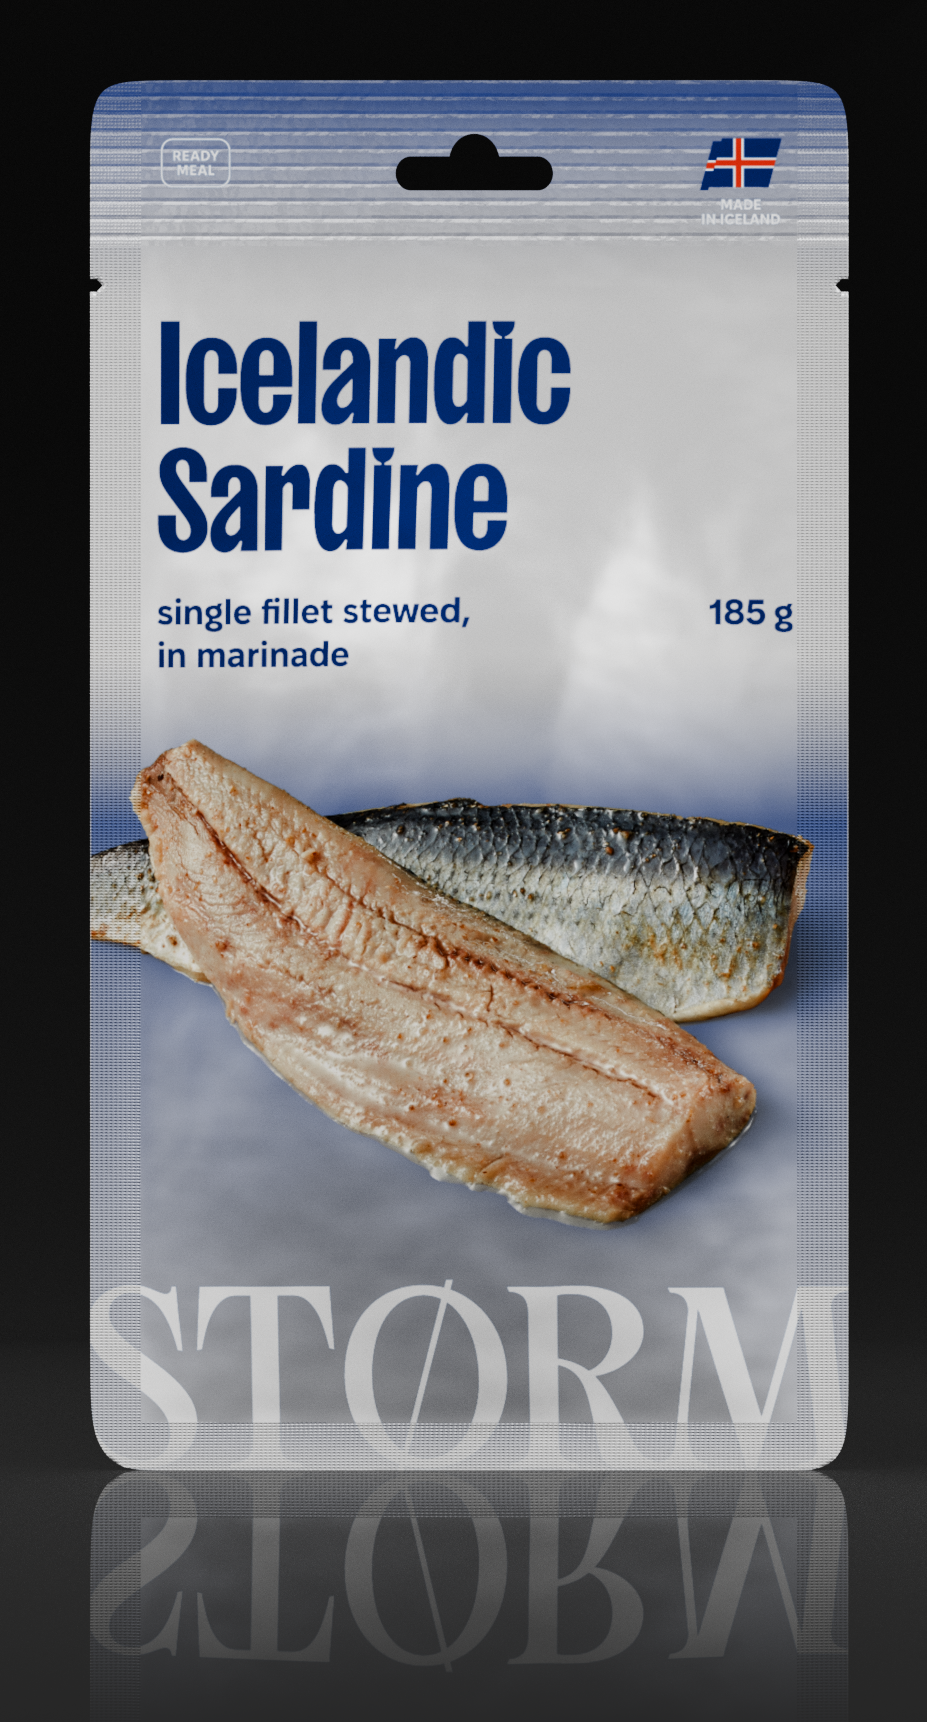 Icelandic Sardine single fillet stewed, in marinade